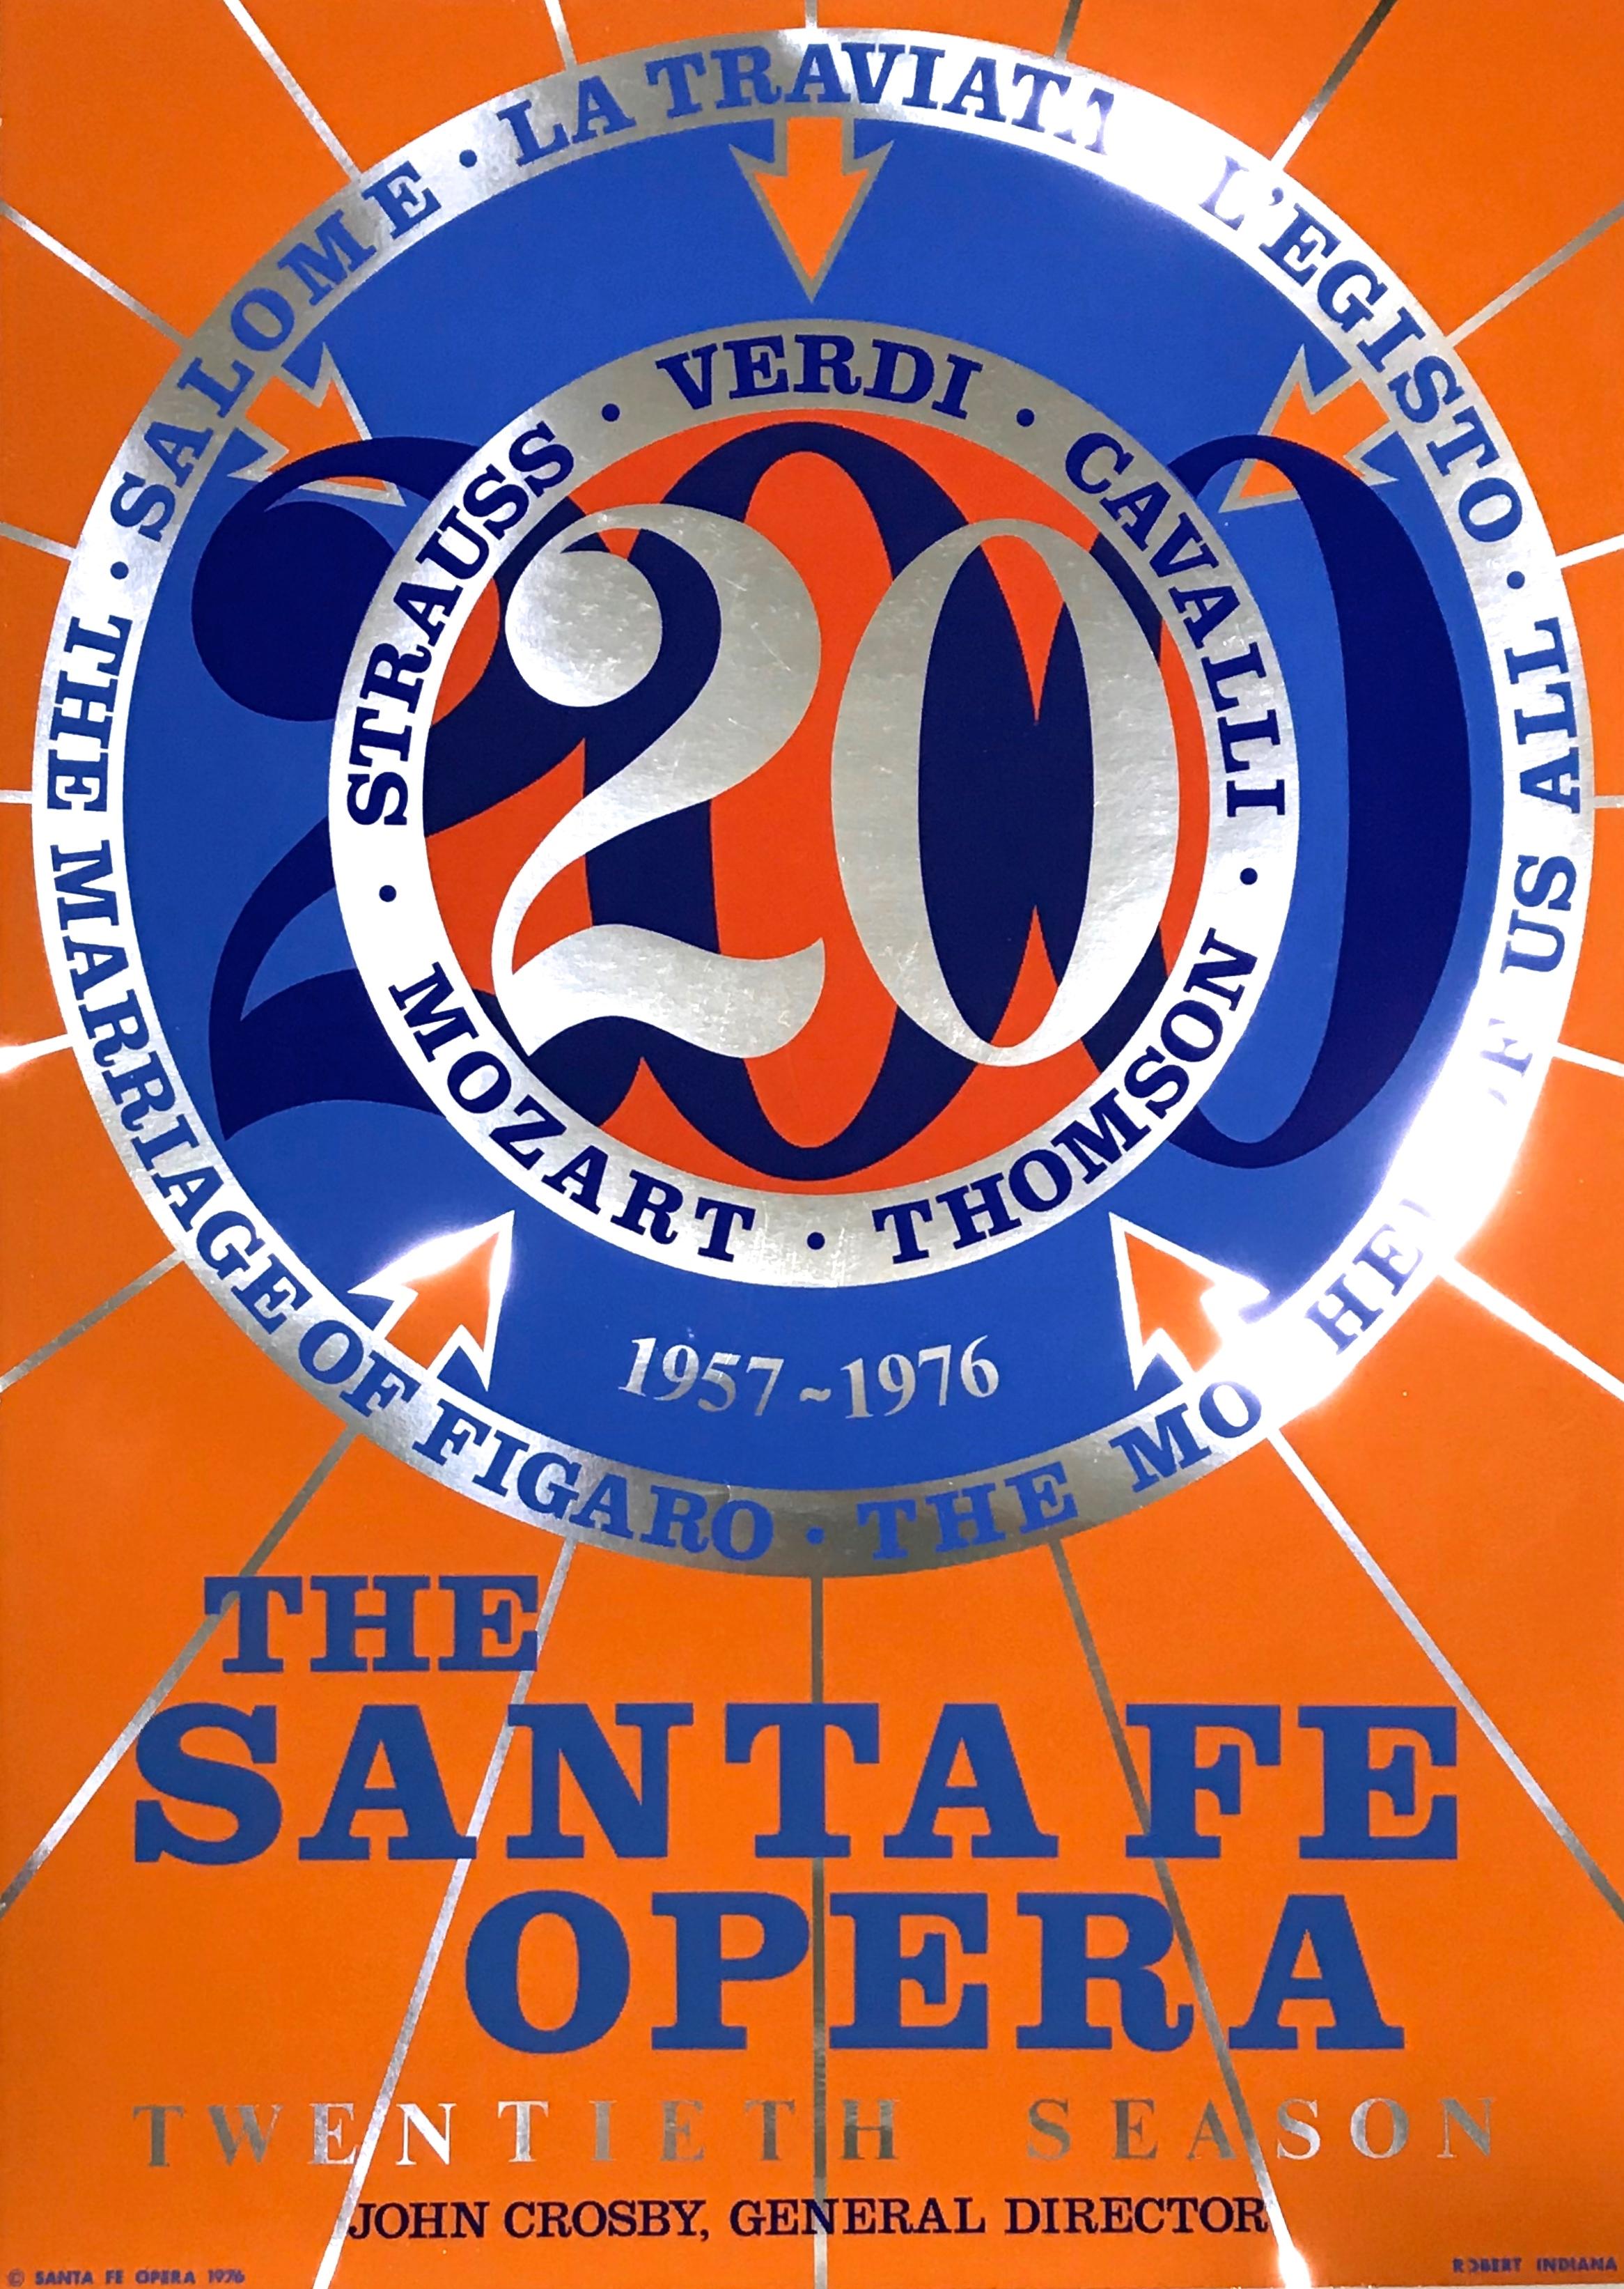 "Santa Fe Opera" serigraph